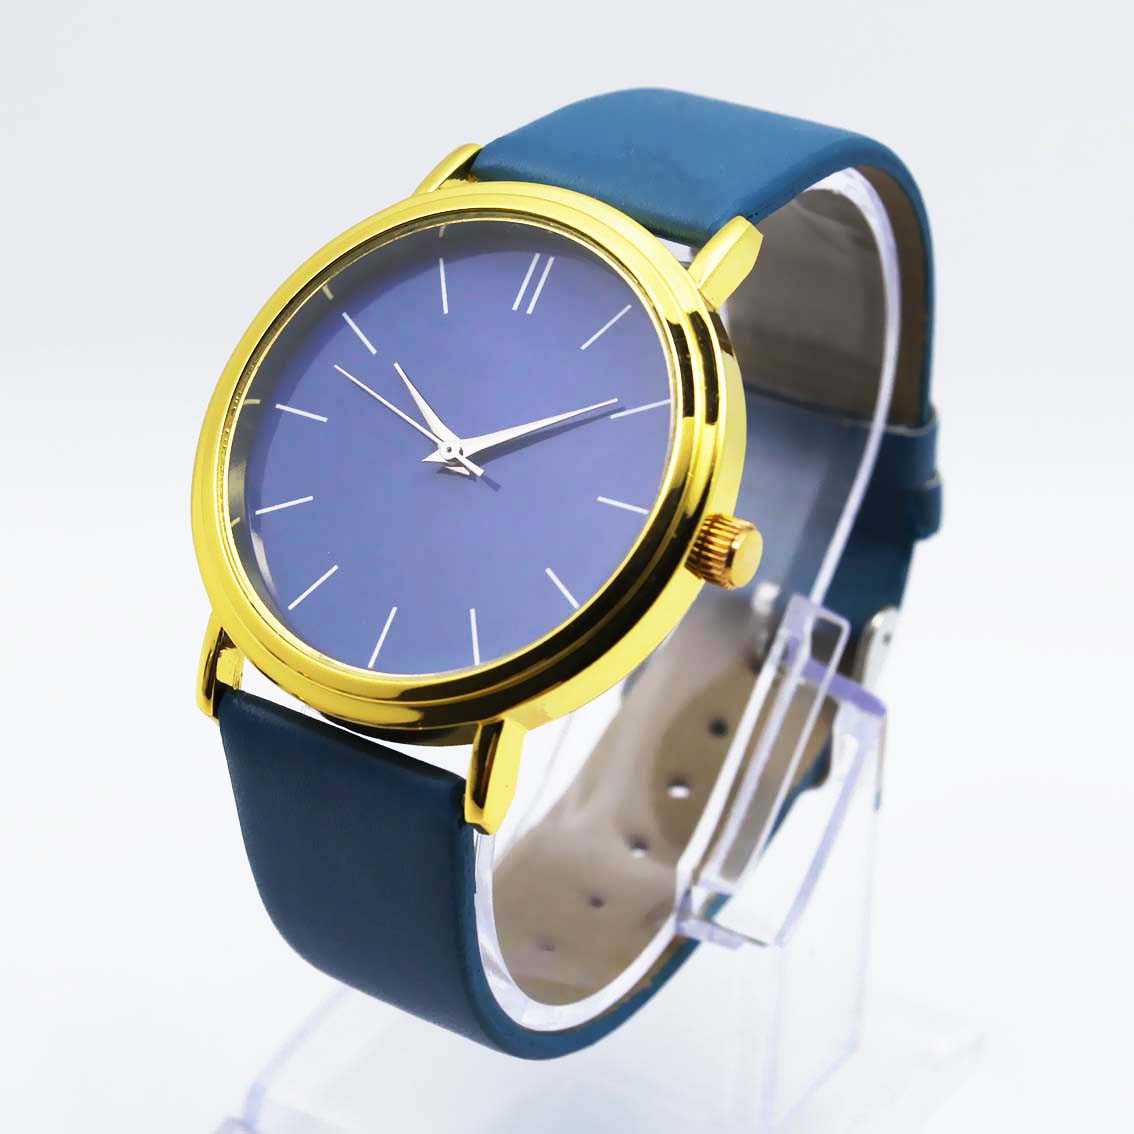 #02129Men's wristwatch quartz analog leather strap watch